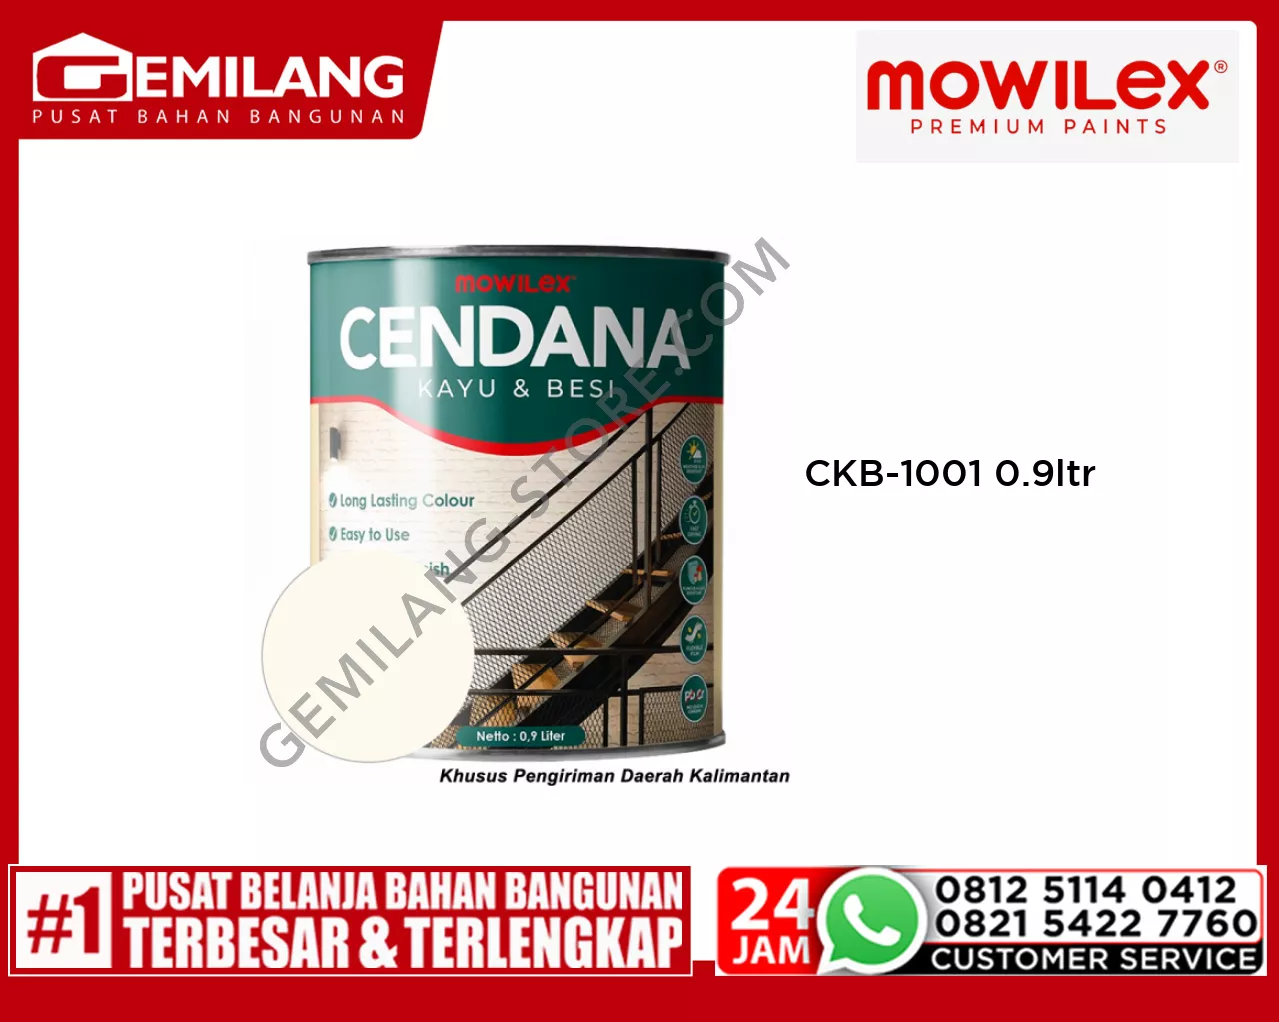 MOWILEX CENDANA KAYU & BESI CKB-1001 WHITE 0.9 ltr